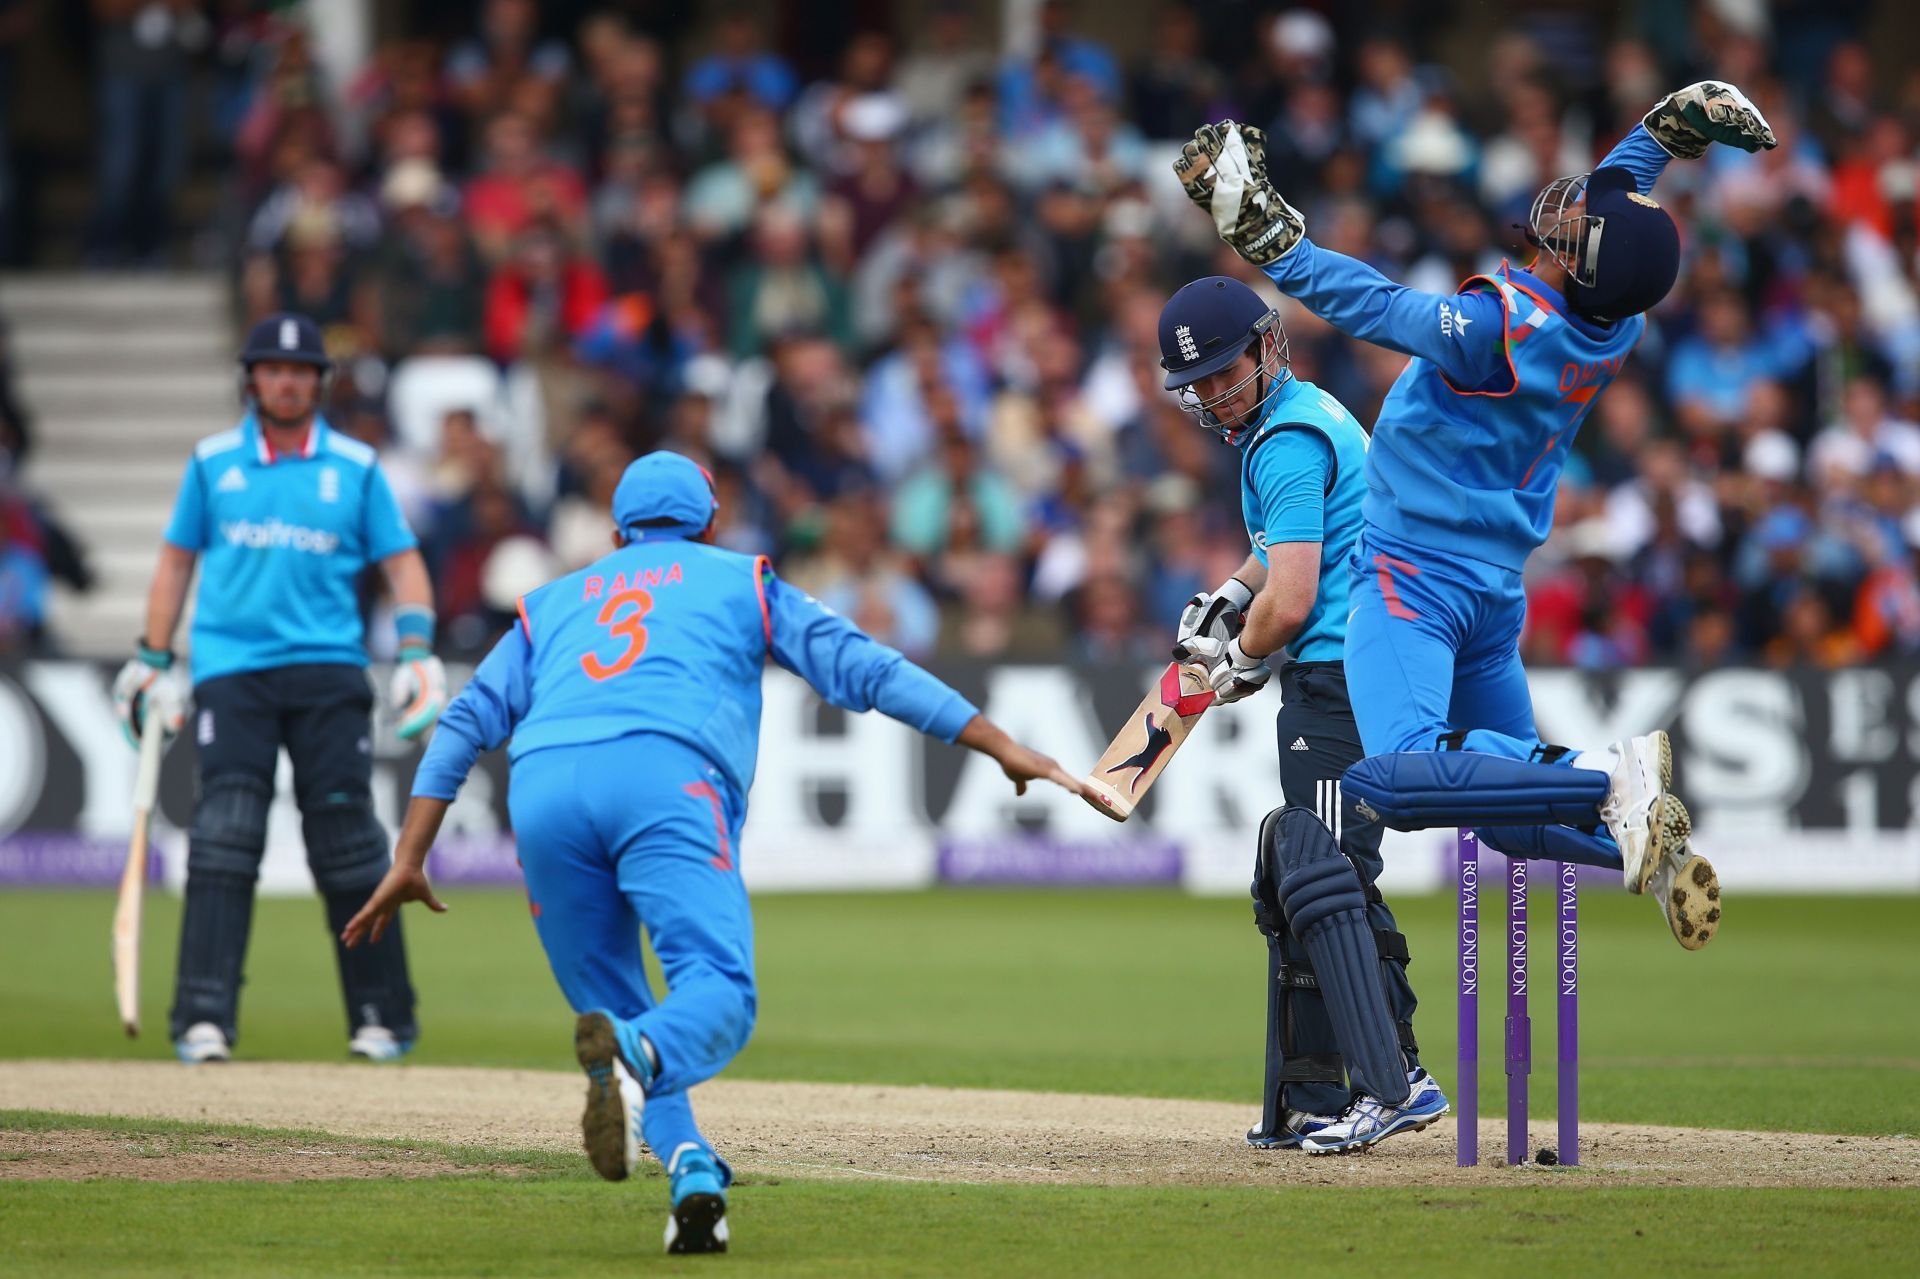 Ashwin strikes, England v India - Royal London One-Day Series 2014